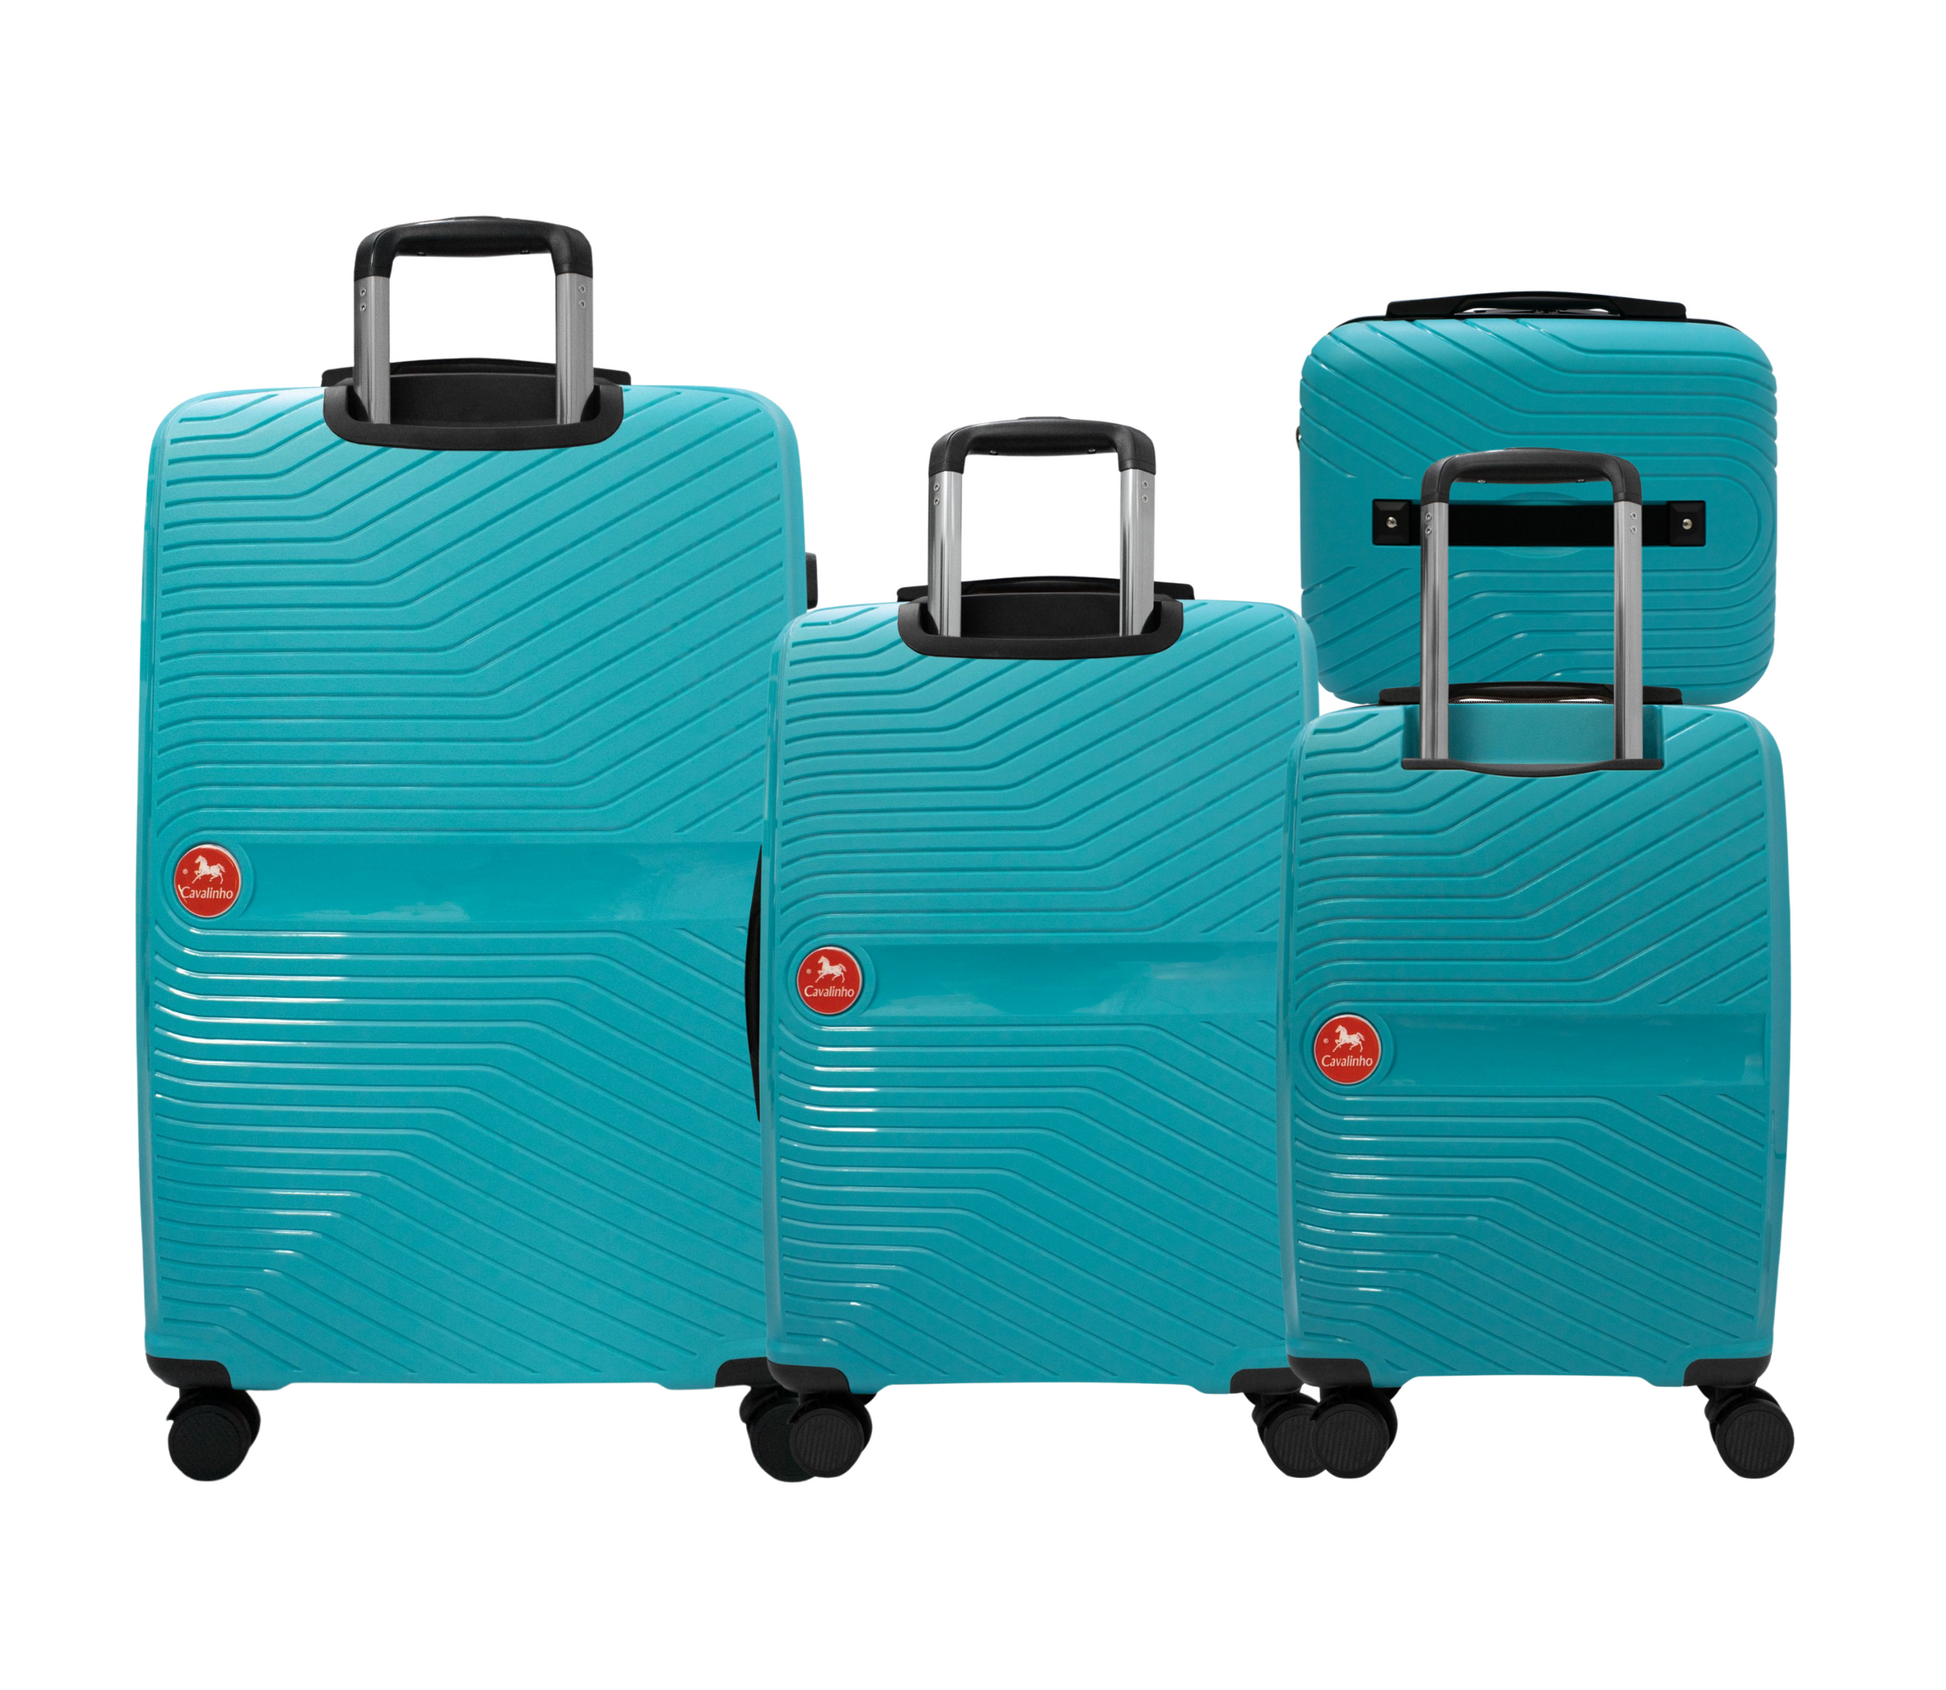 Cavalinho Canada & USA 4 Piece Set of Colorful Hardside Luggage (15", 19", 24", 28") - DarkTurquoise - 68020004.25.S4_3